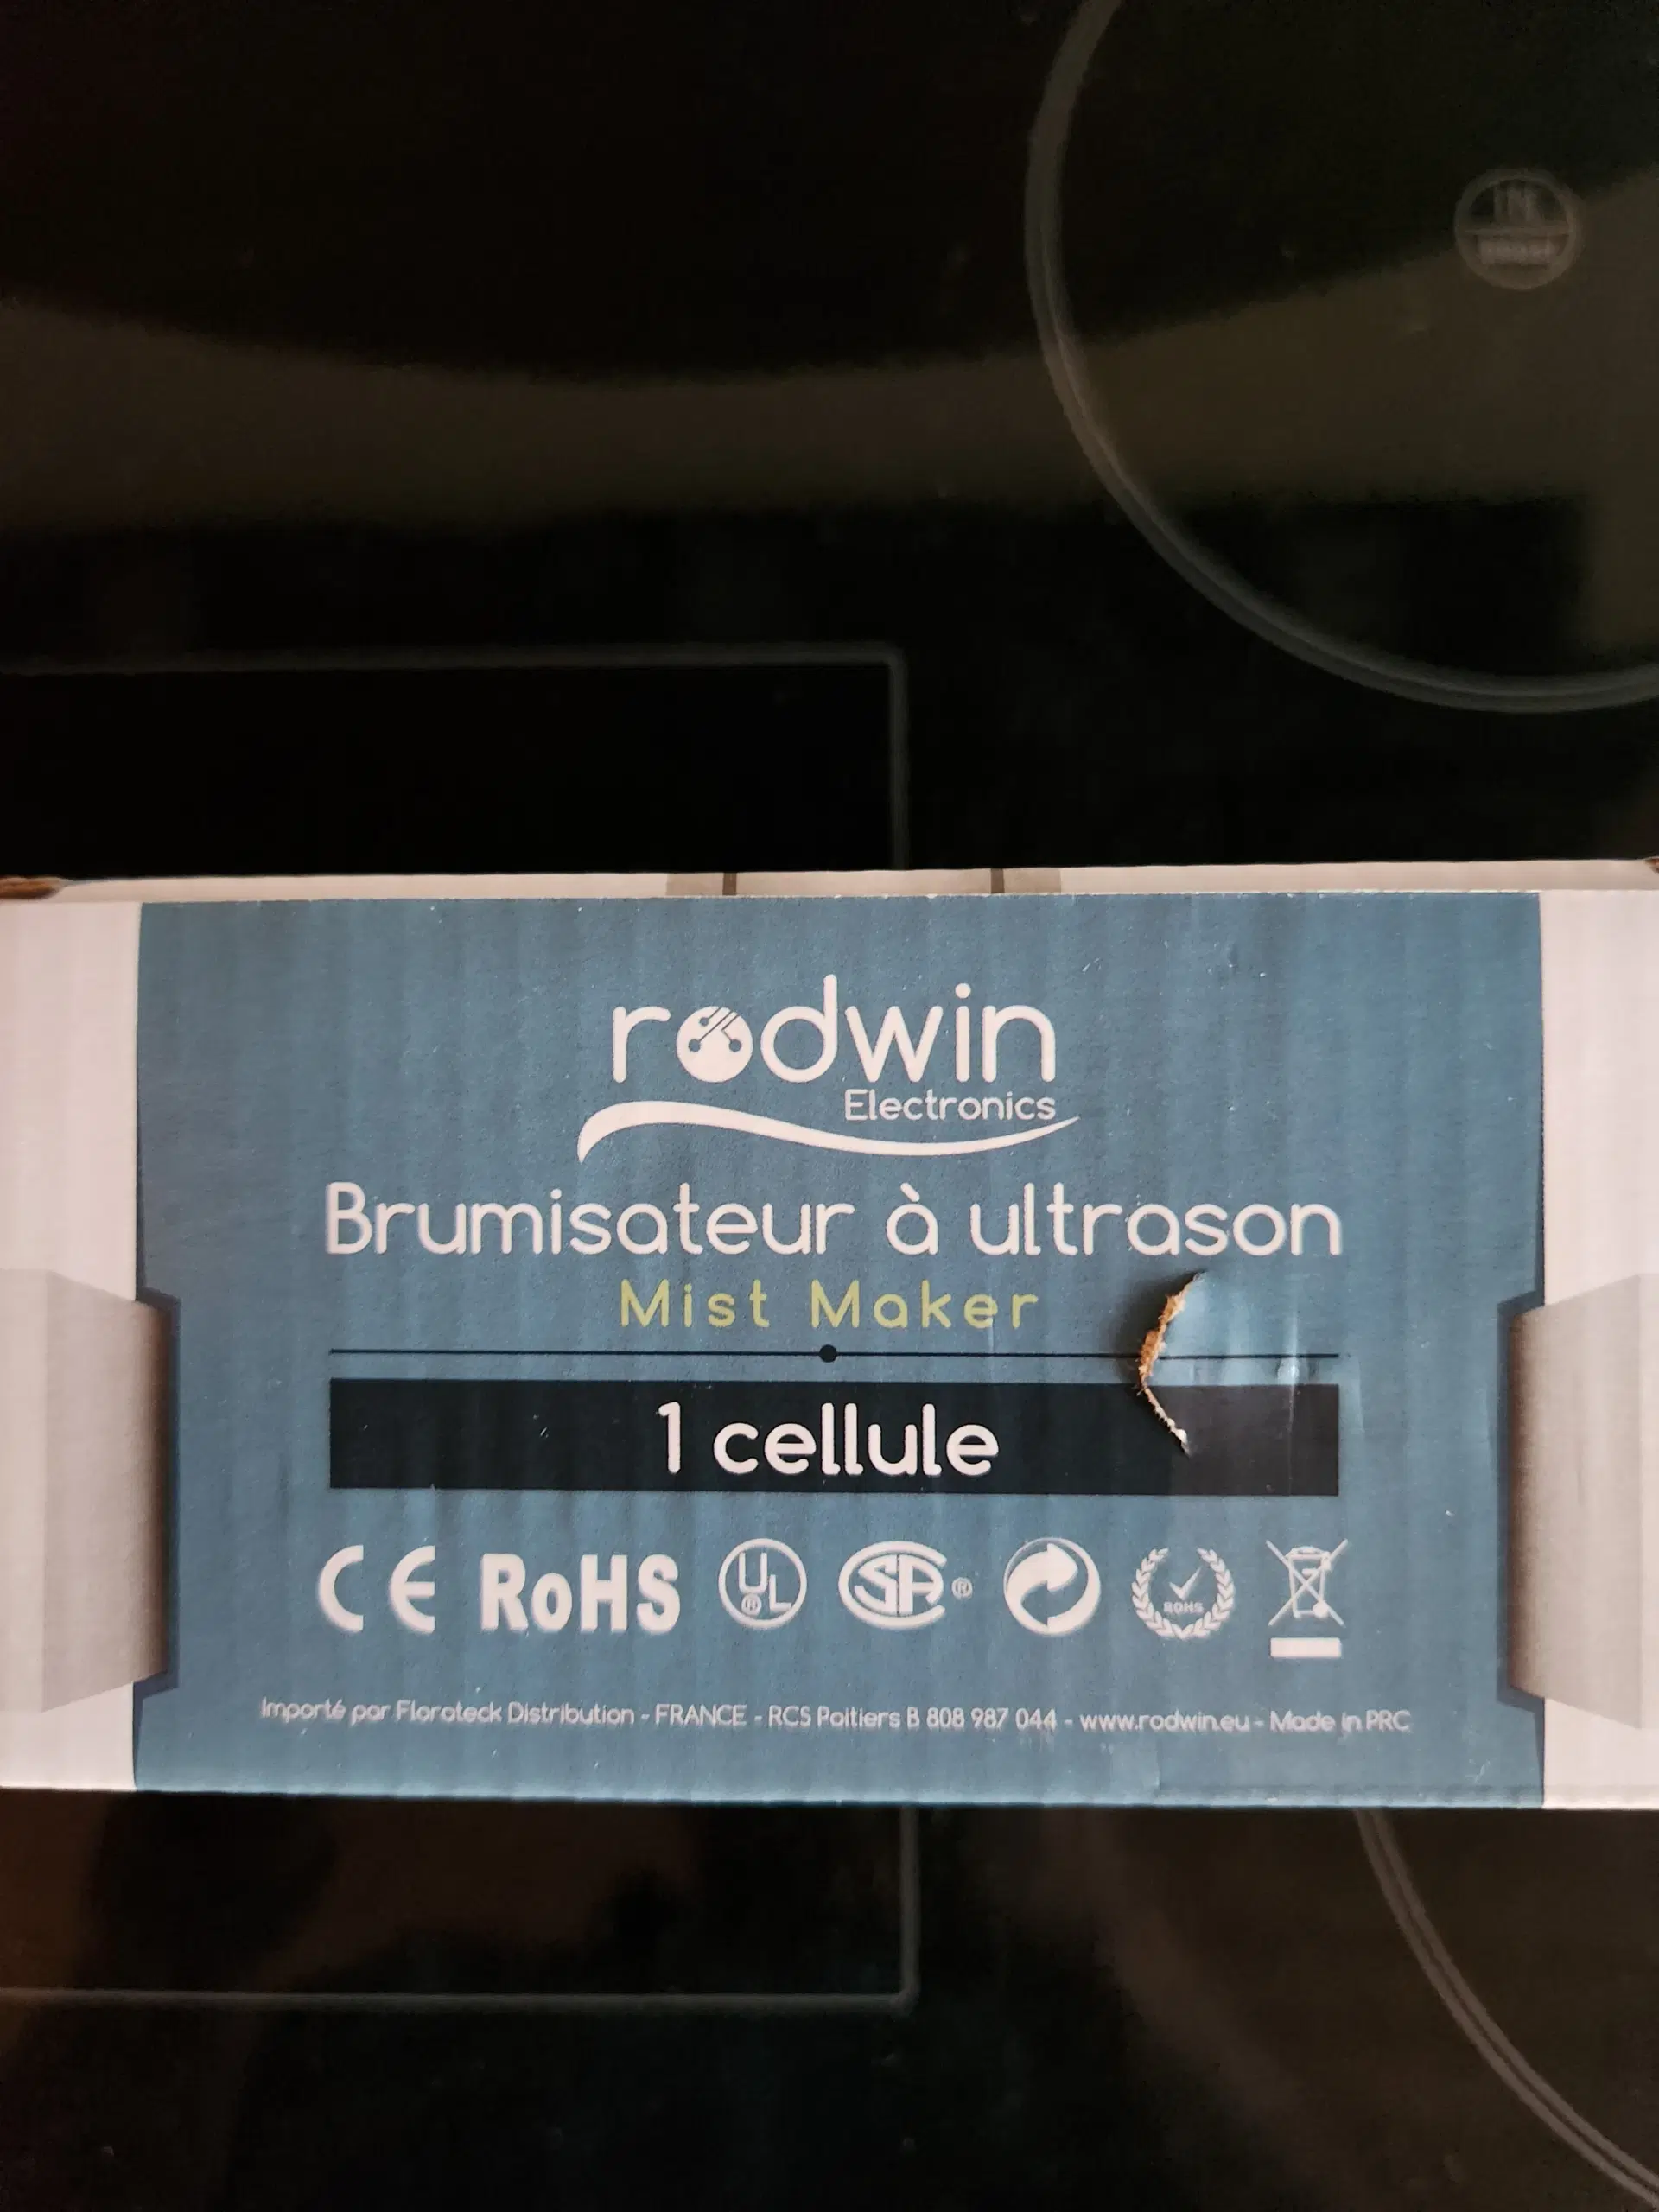 Brumisateur à ultrasons - 1 cellule - Rodwin Electronics